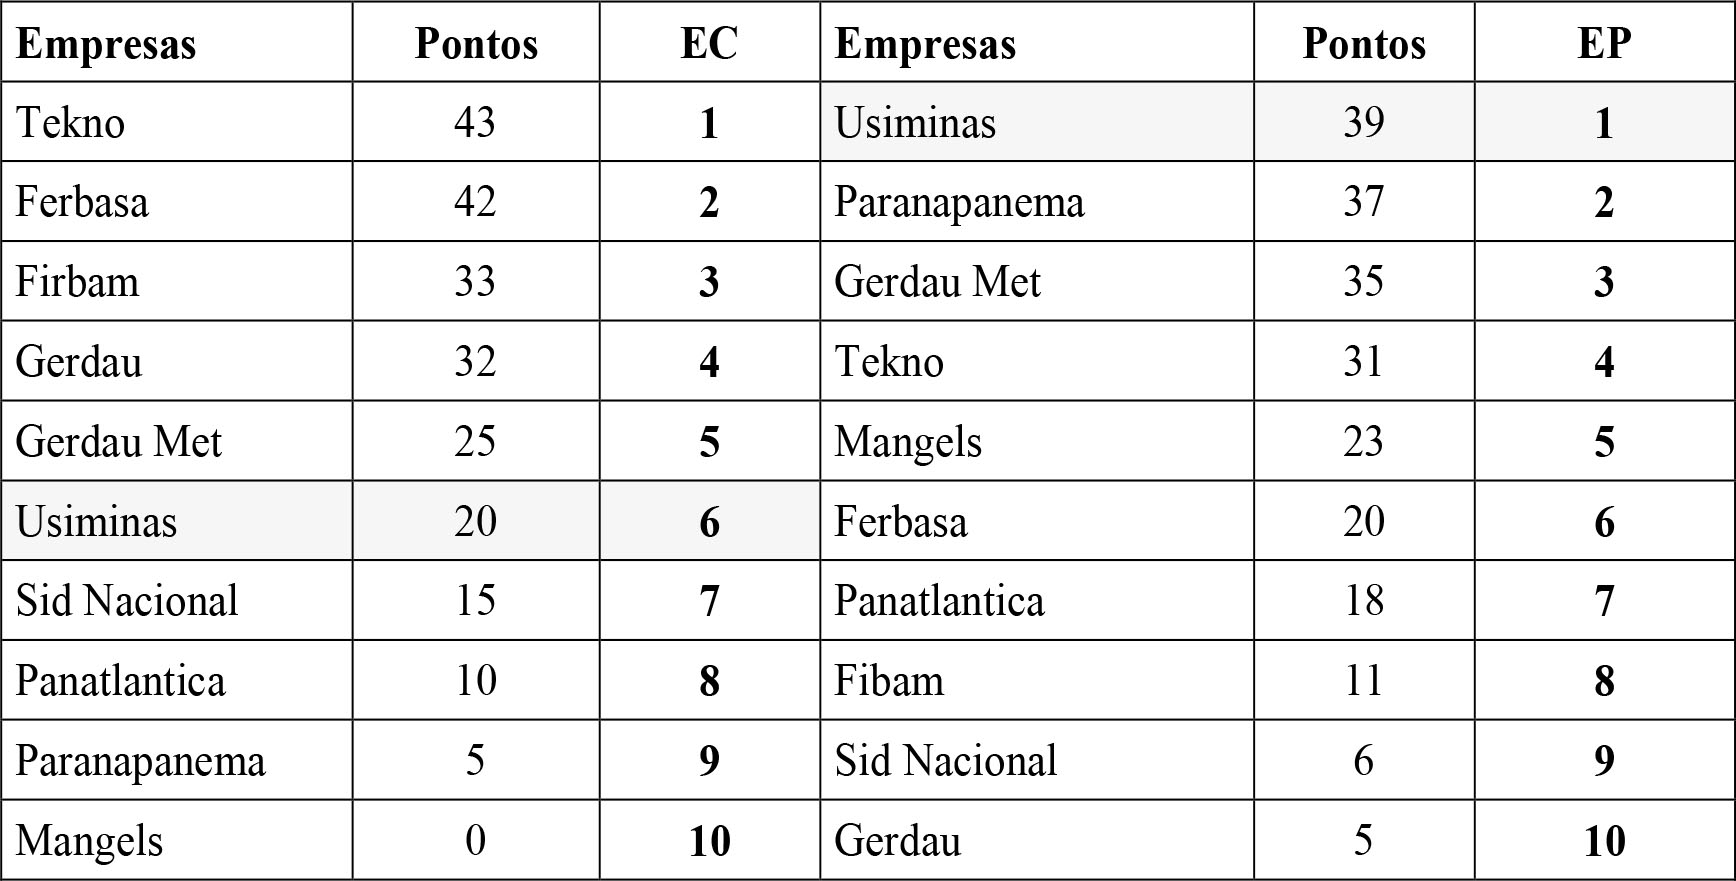 Comparativo rankings geral para EC e EP